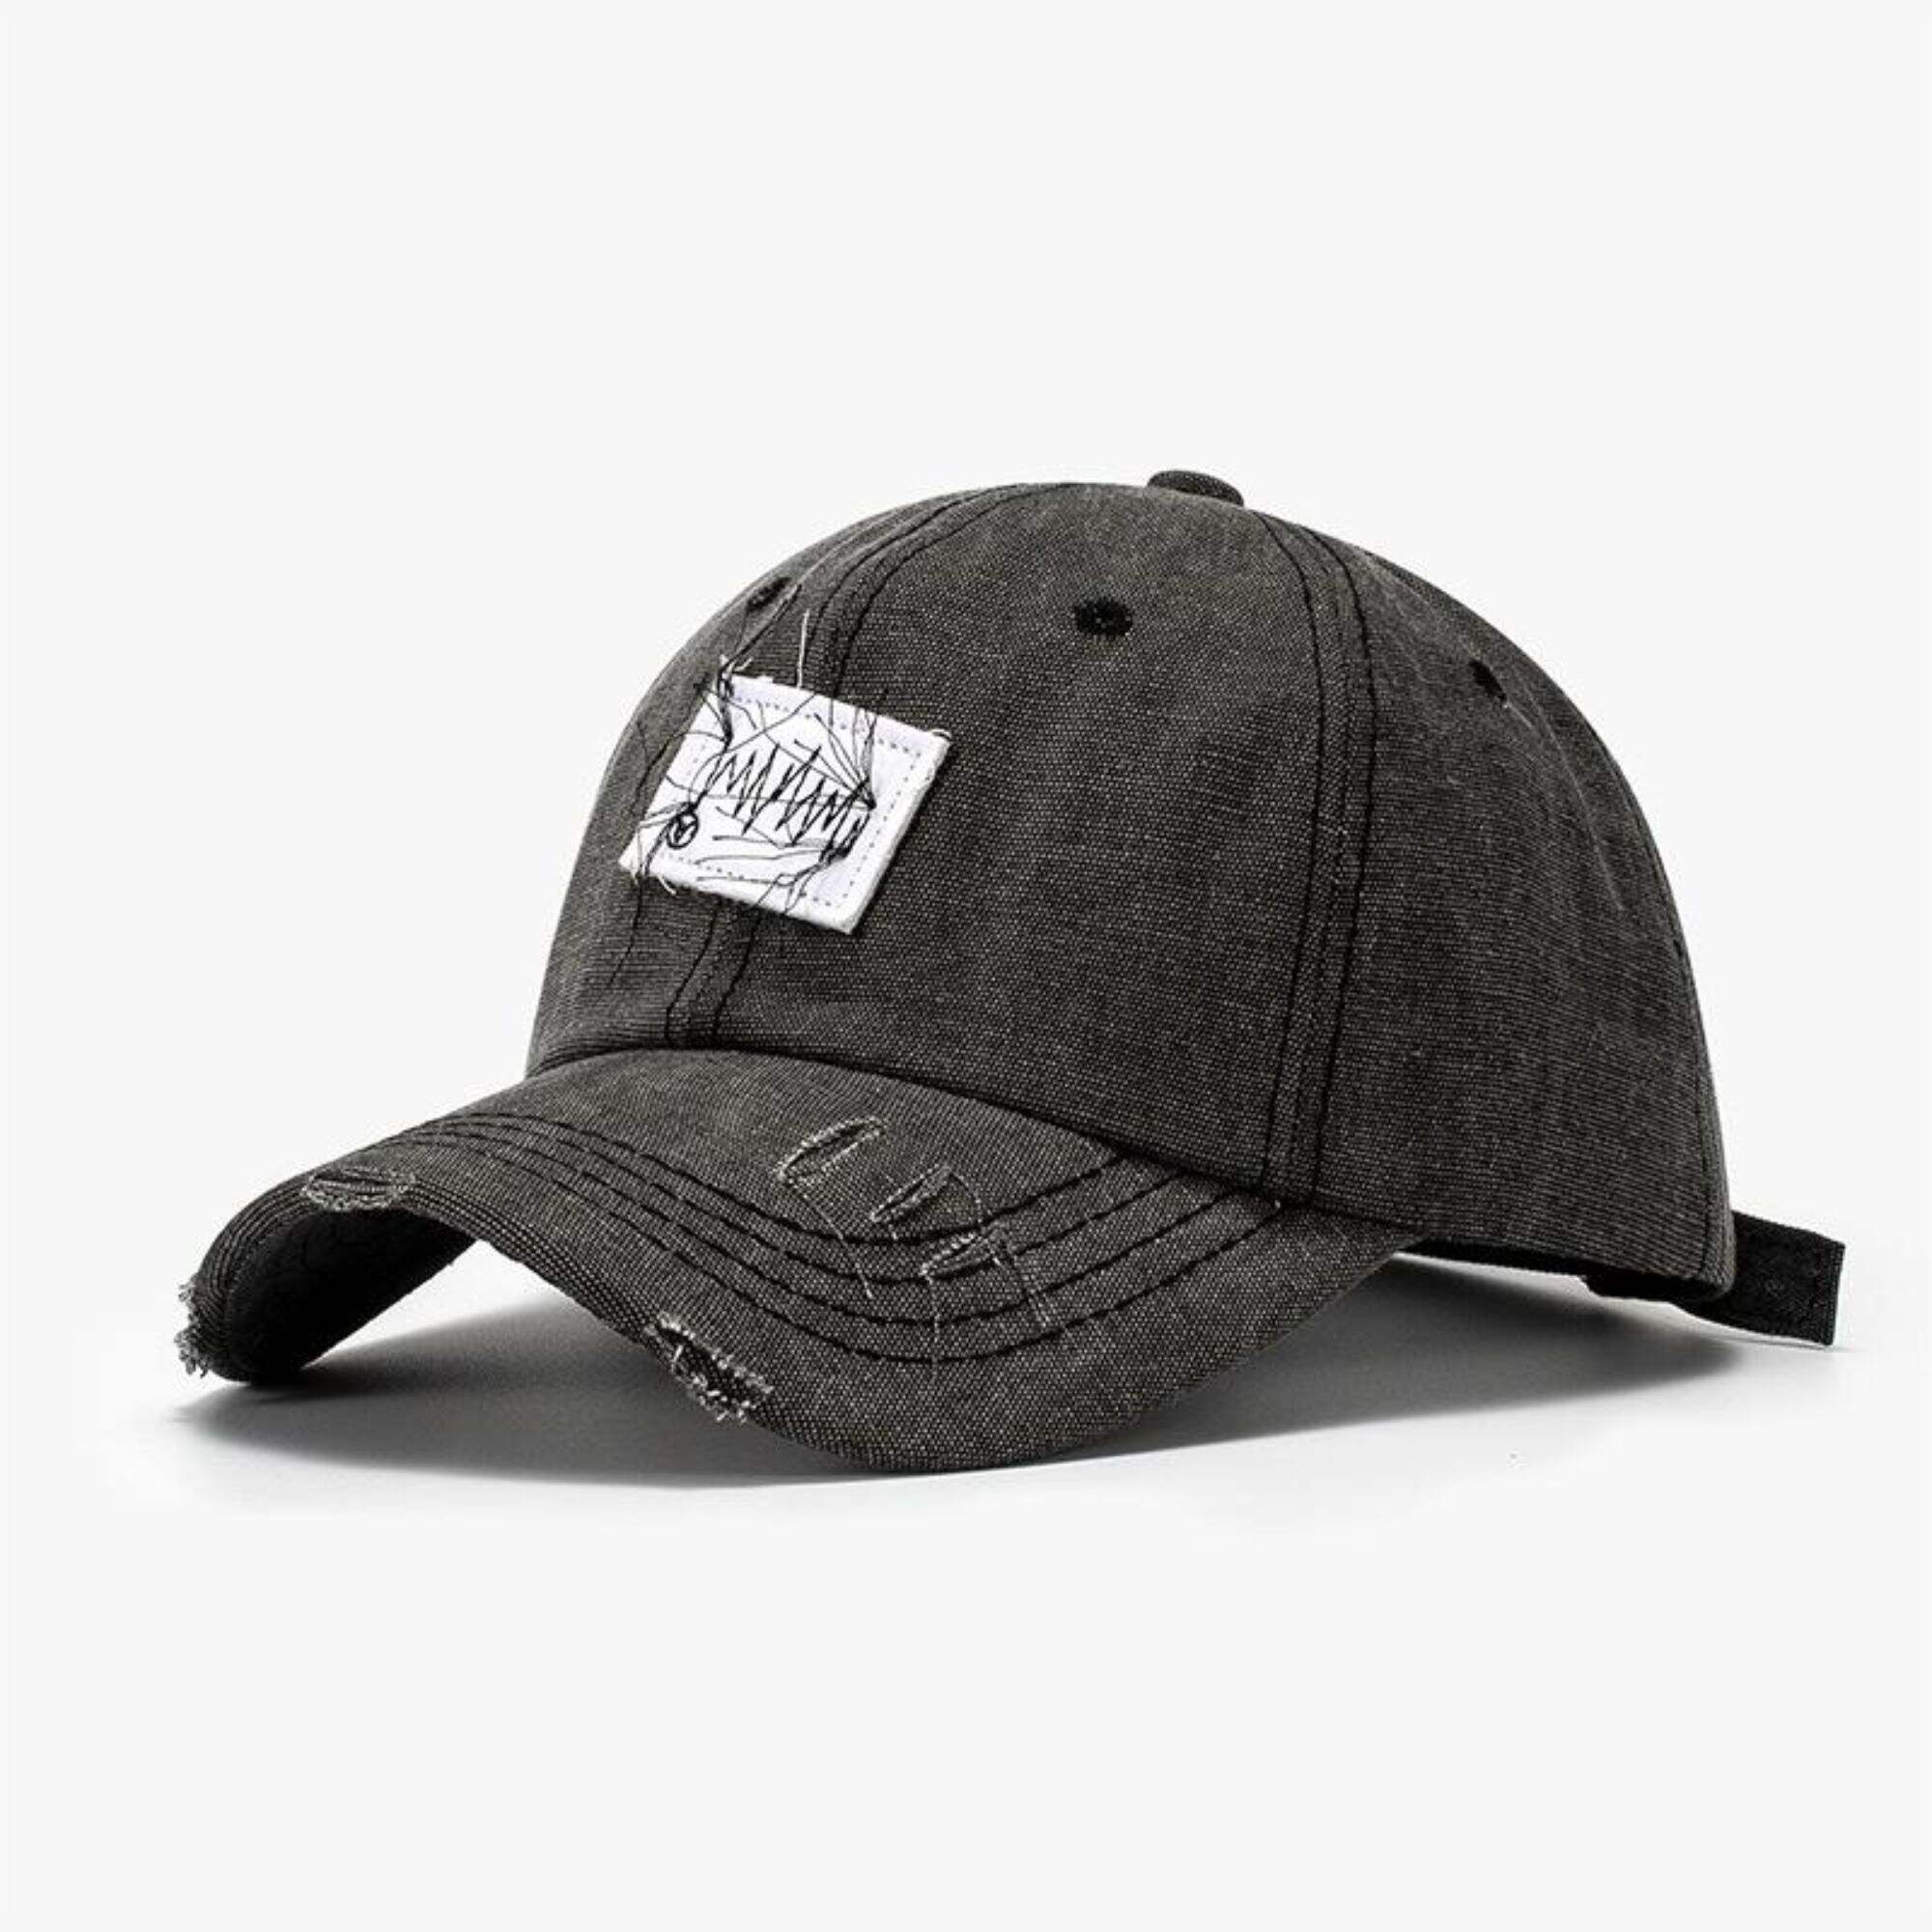 Custom applique embroidered baseball cap